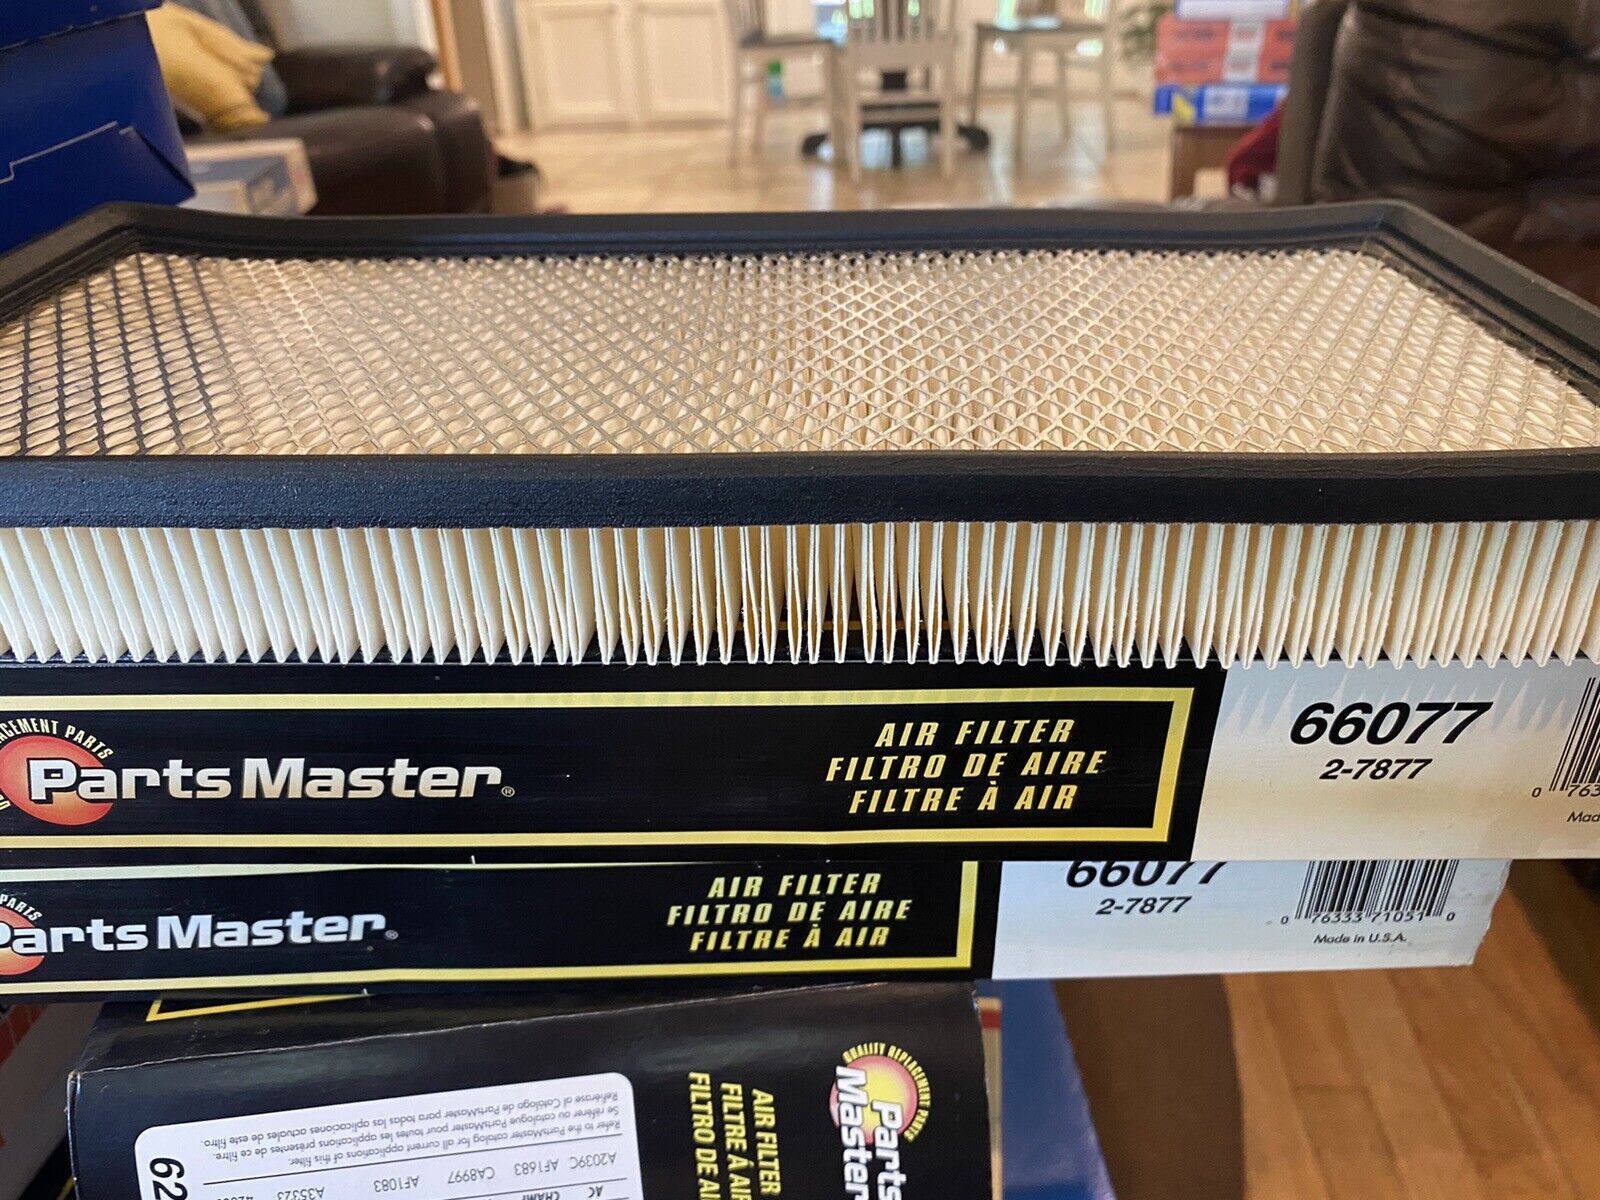 Parts Master Air Filter 66177- Same As Wix 46126